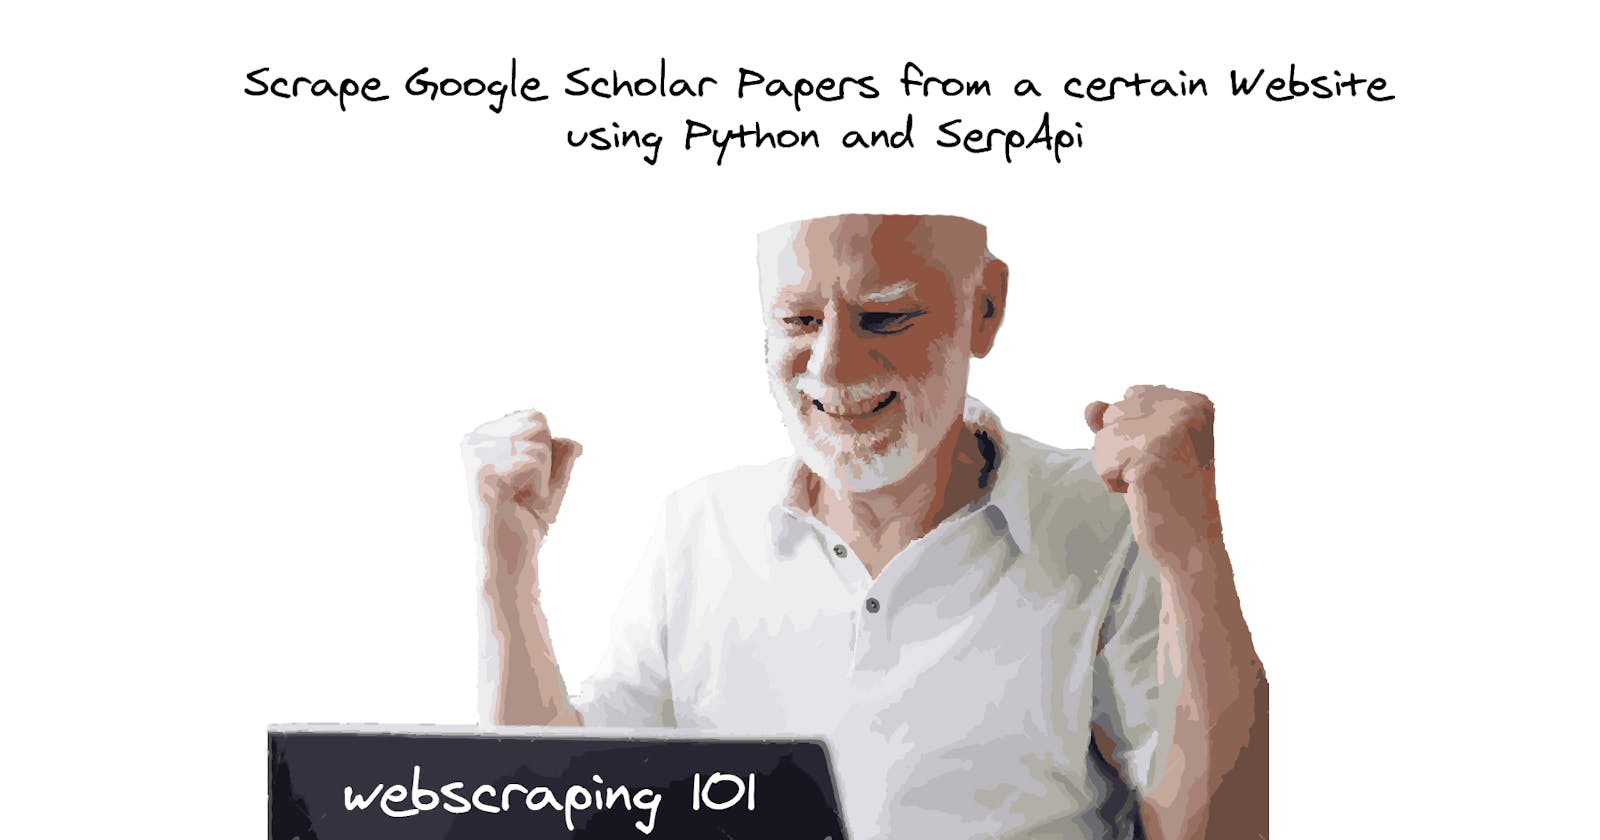 Scrape Google Scholar Publications within a certain website in Python